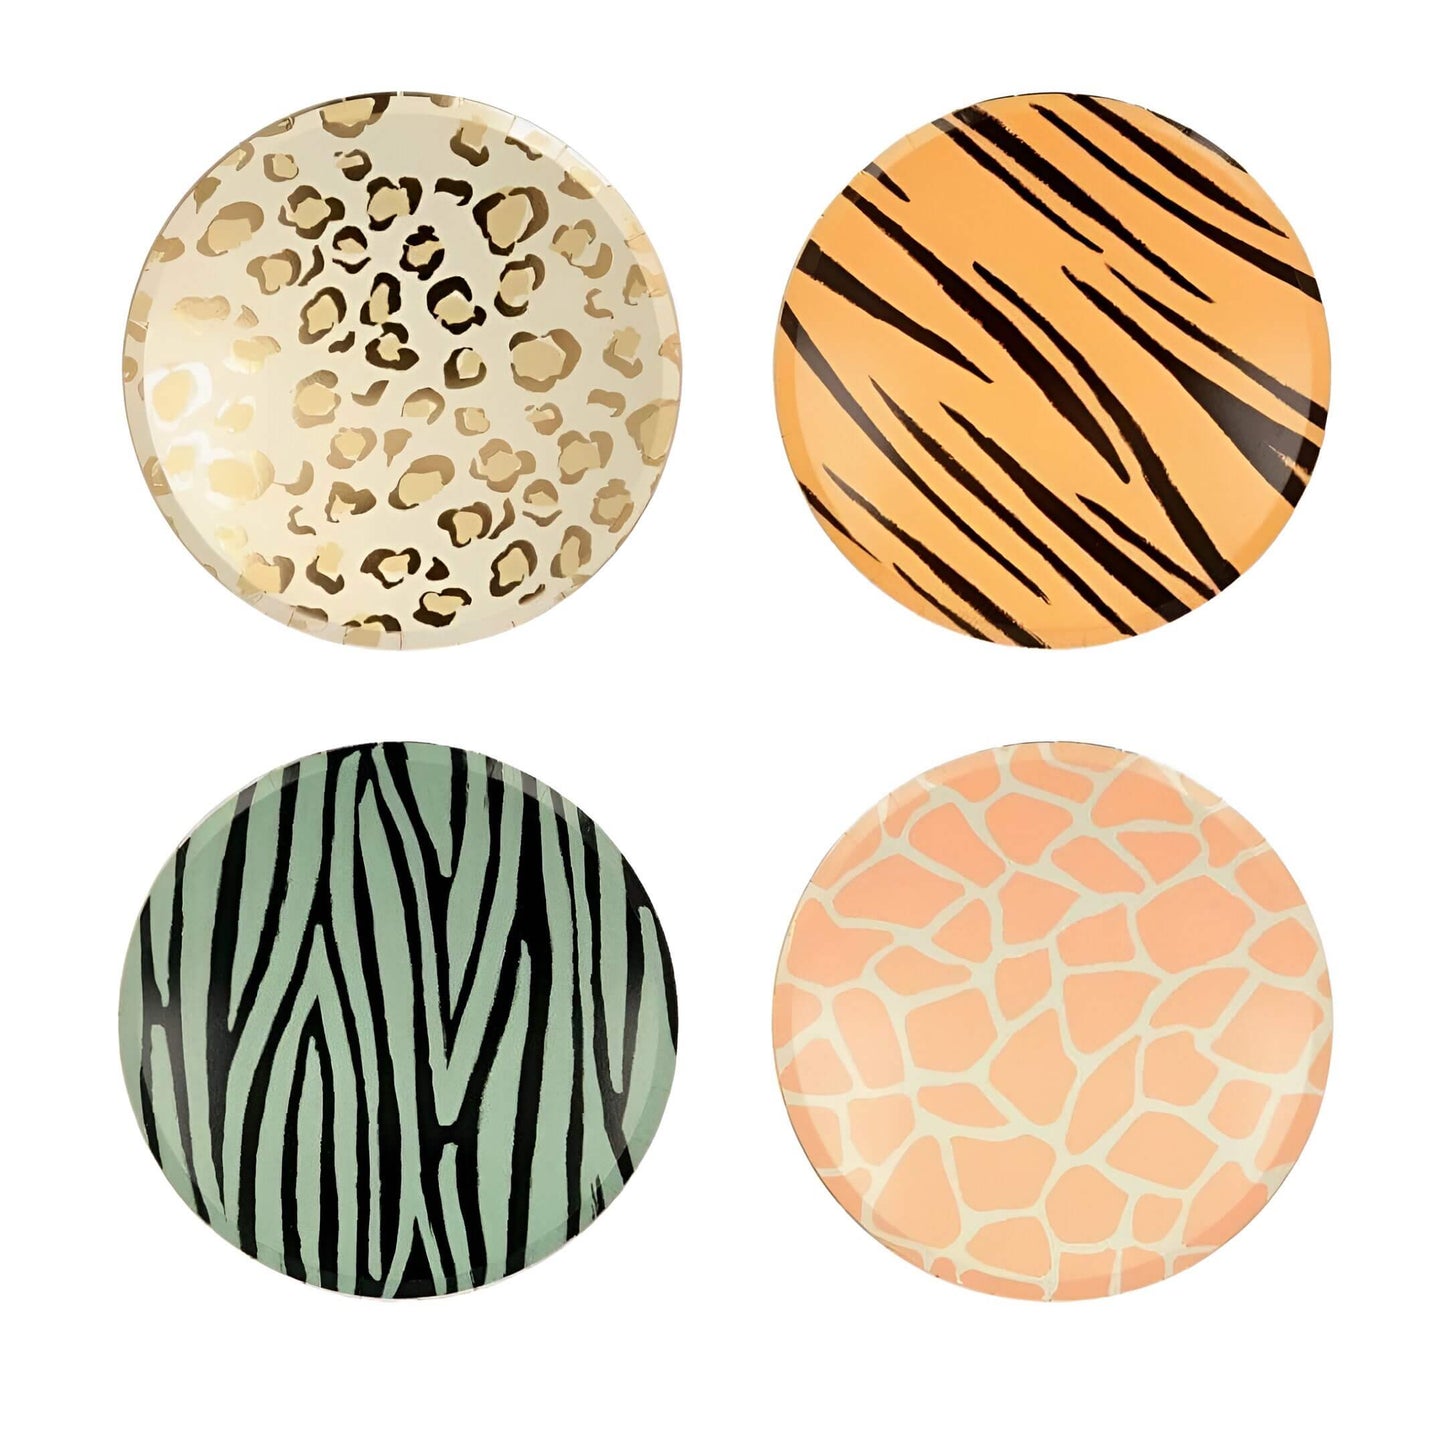 Meri Meri Safari Side Plates In 4 Different Animal Print Designs. 20cm | 8 Pack